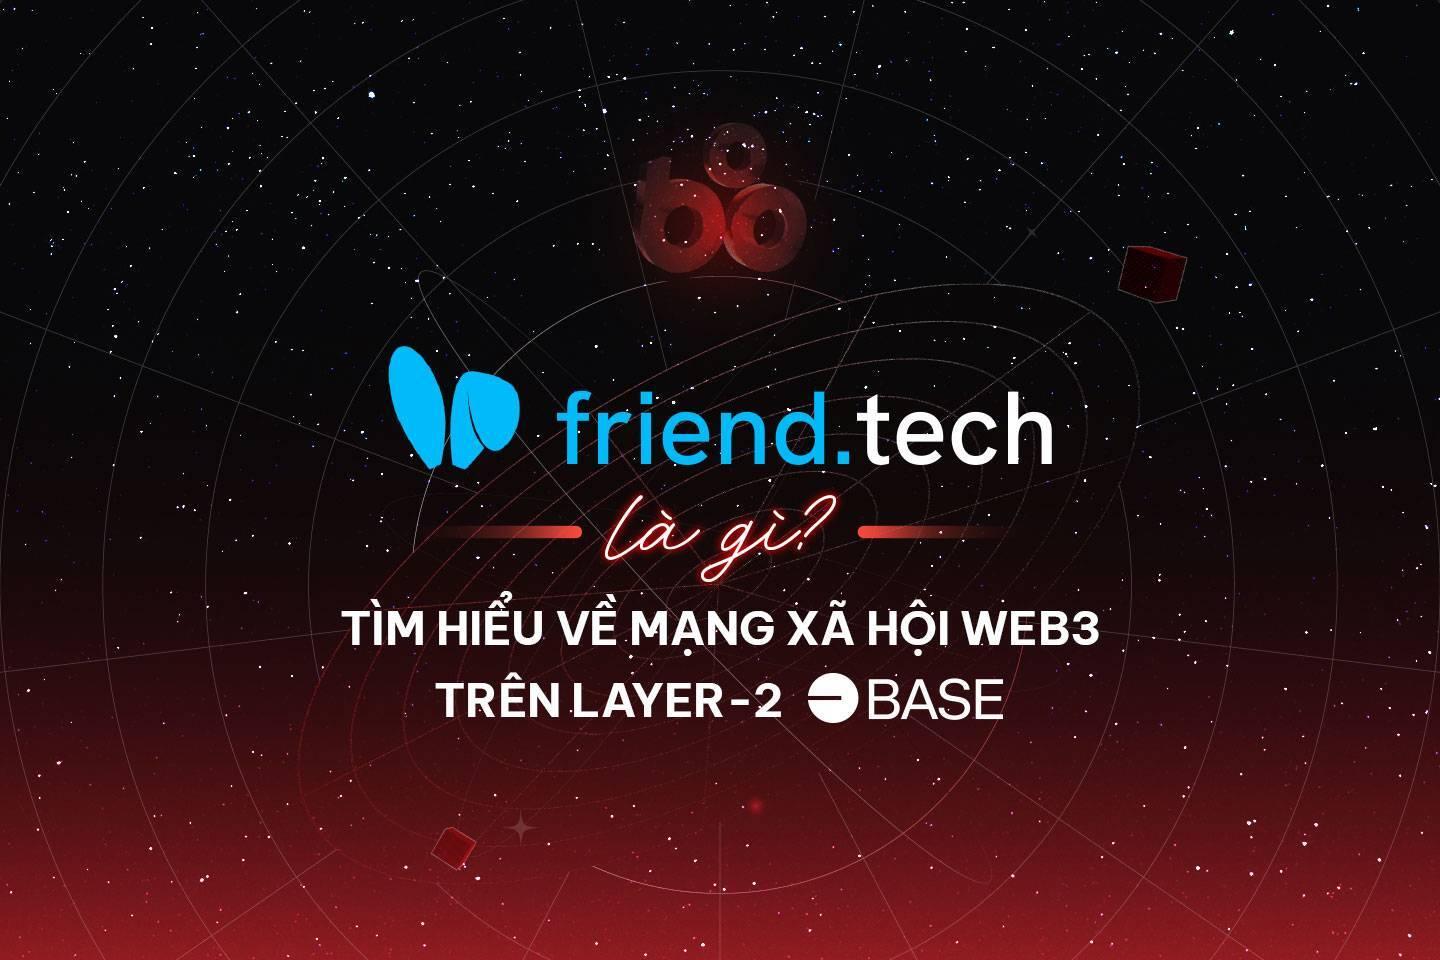 friendtech-la-gi-tim-hieu-ve-mang-xa-hoi-web3-tren-layer-2-base